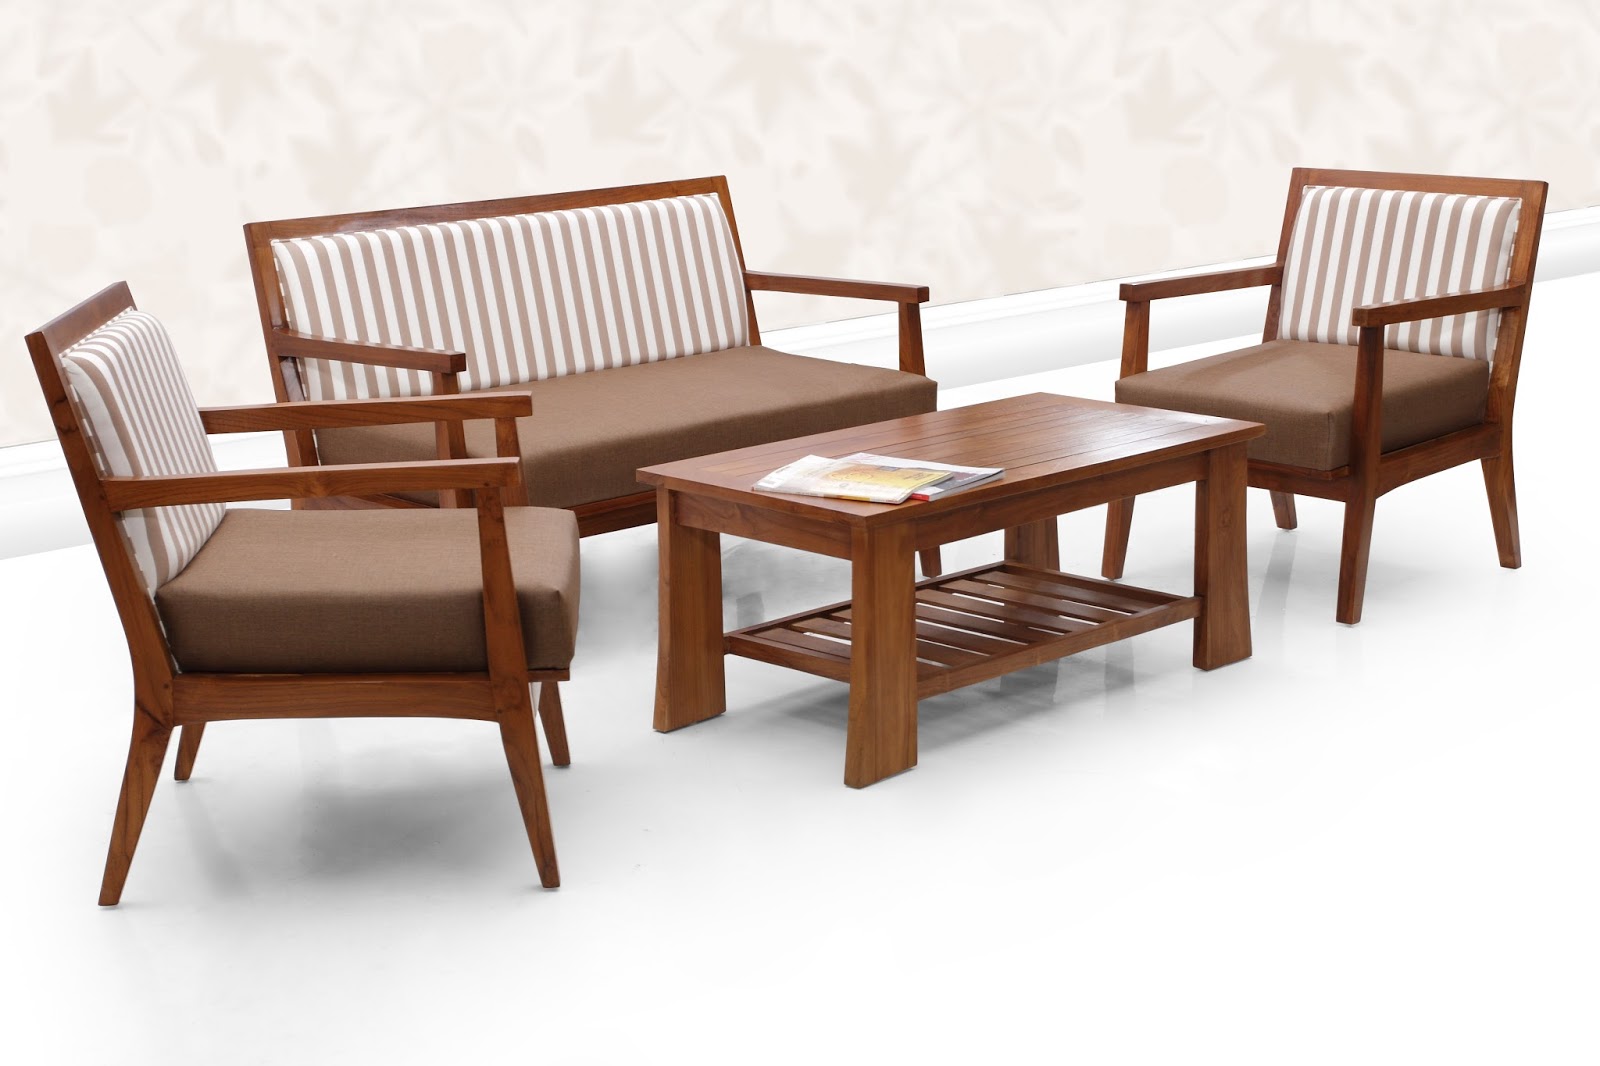 Teak Wood Furniture Malaysia And Outdoor Wicker Garden Furniture